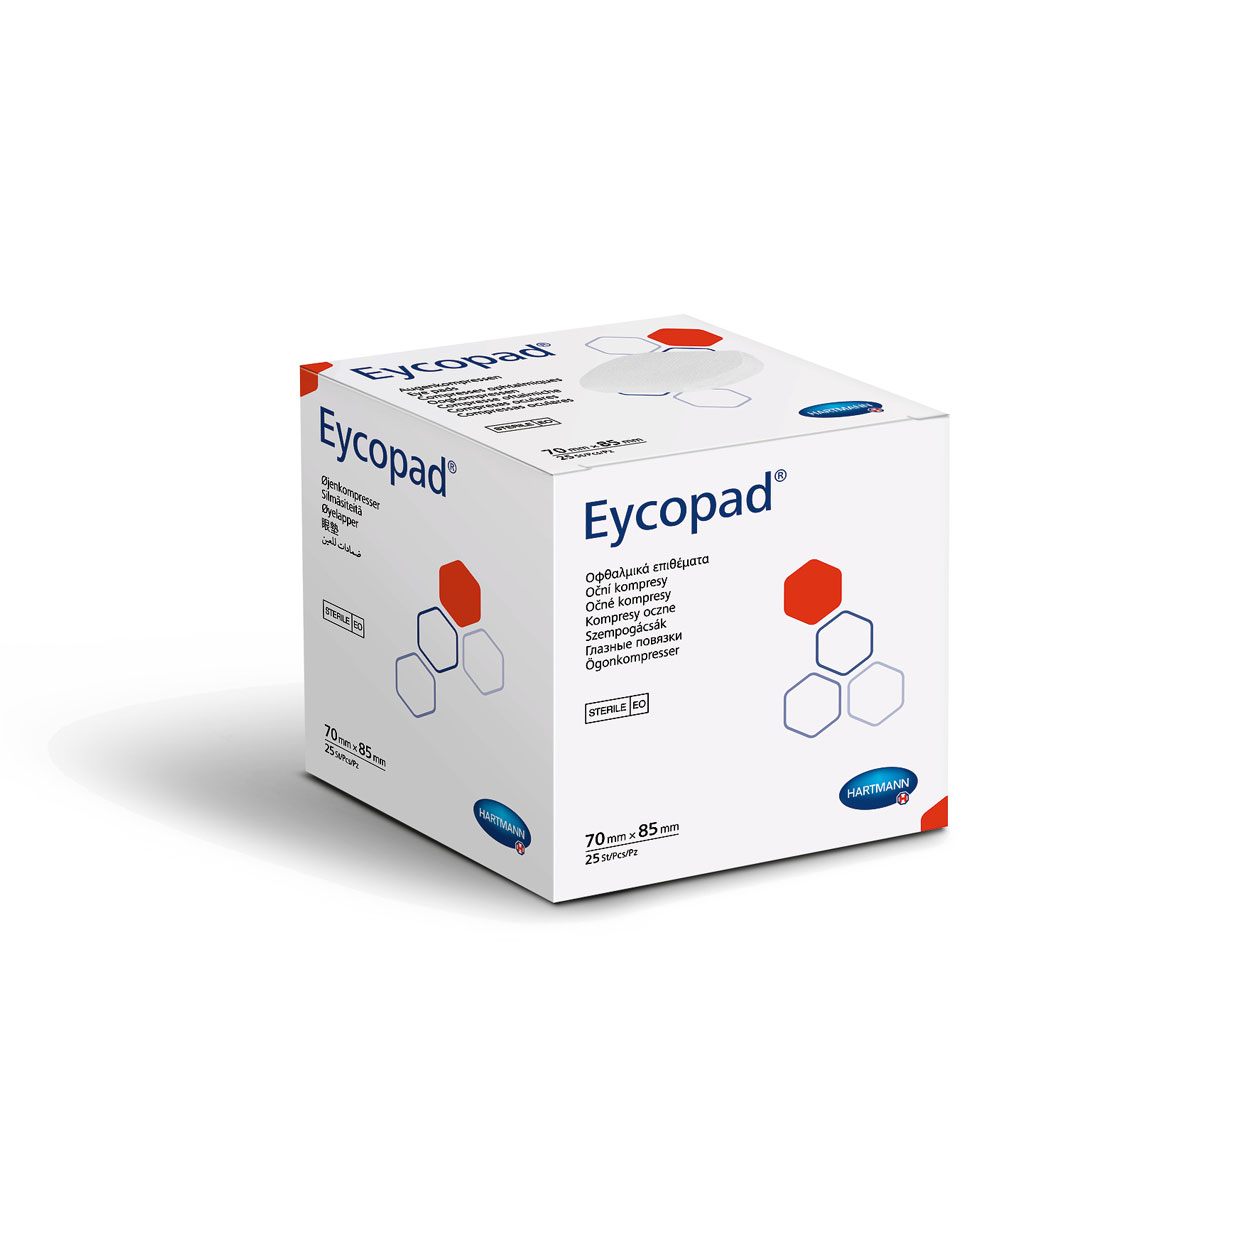 Eycopad® steril, 70mm x 85mm, 1 Faltschachtel à 25 Stück